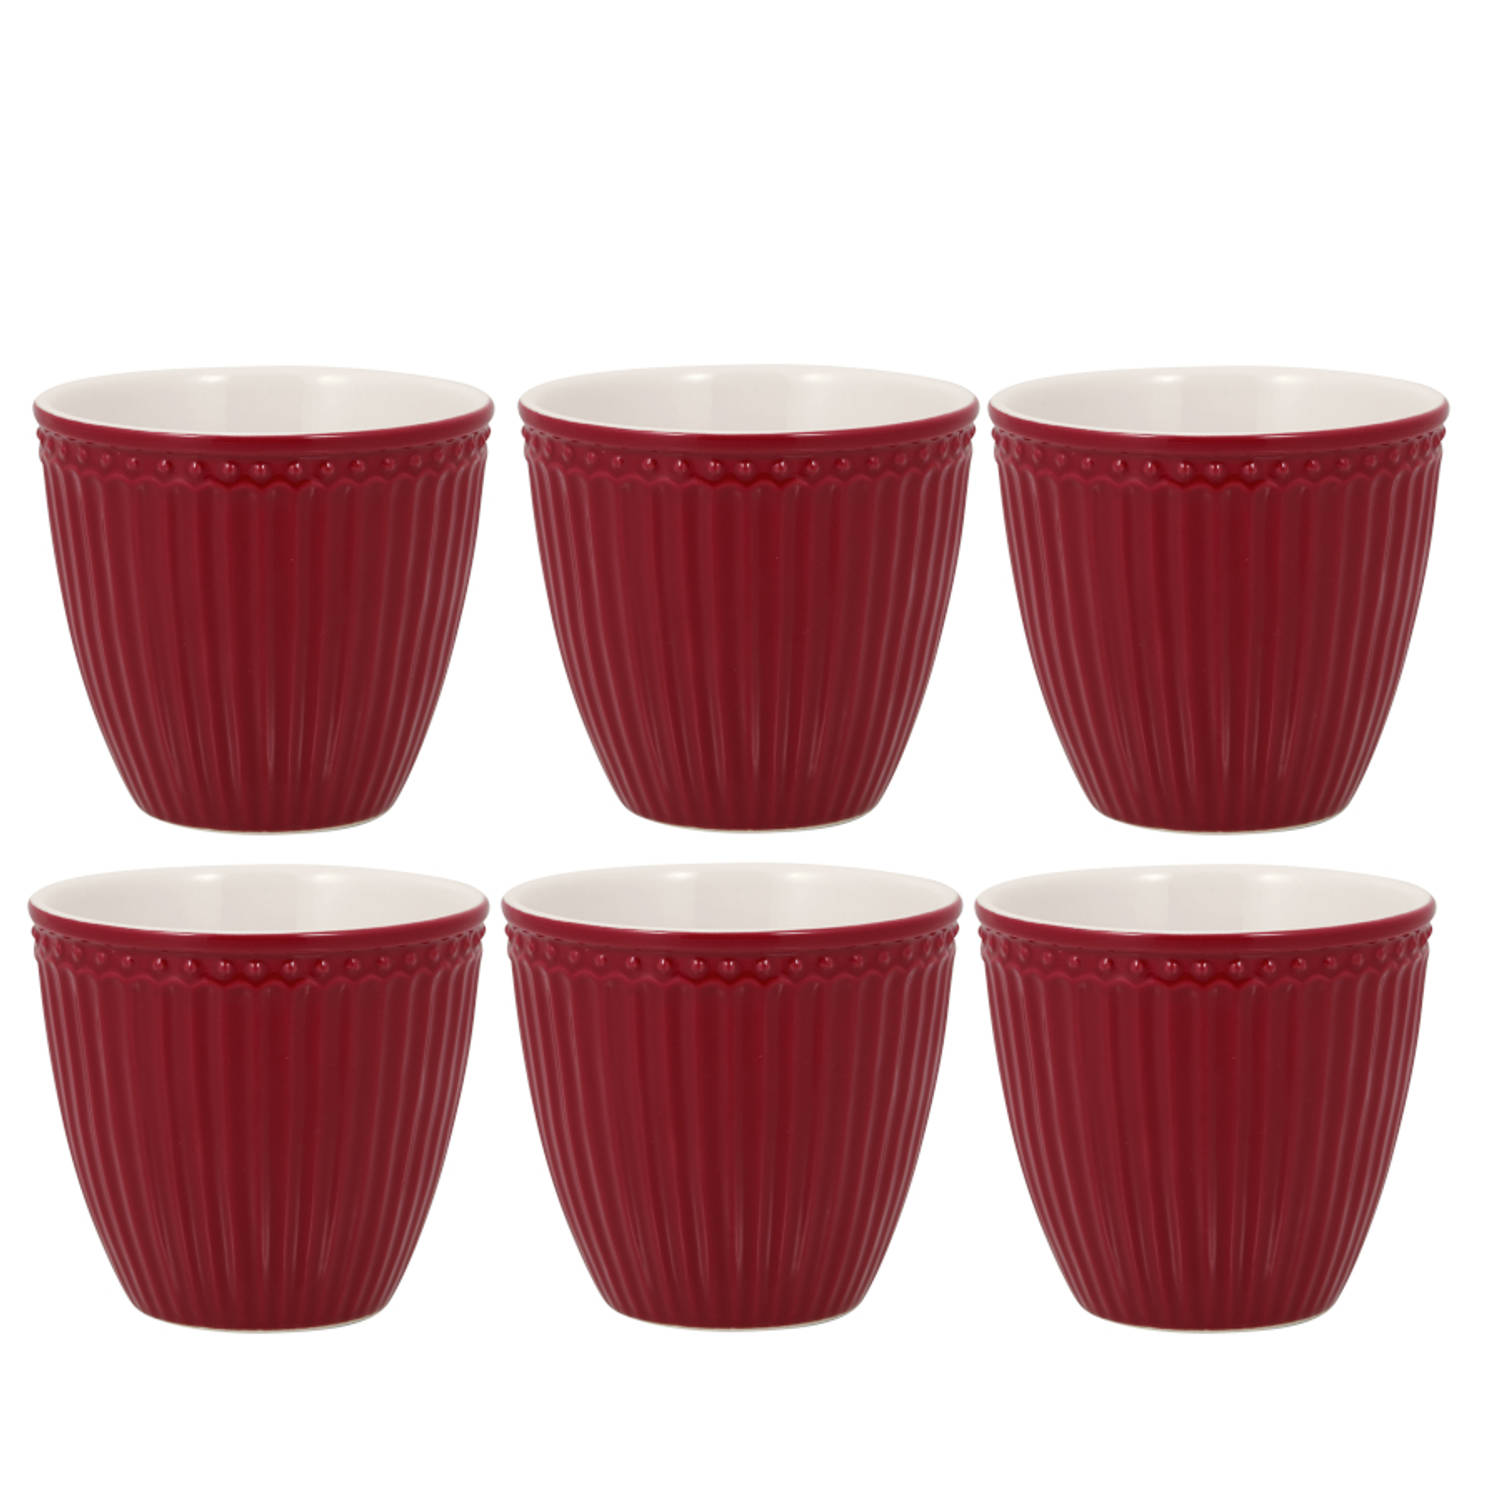 6x GreenGate Beker (Latte Cup) Alice claret red 300 ml - Ø 10 cm